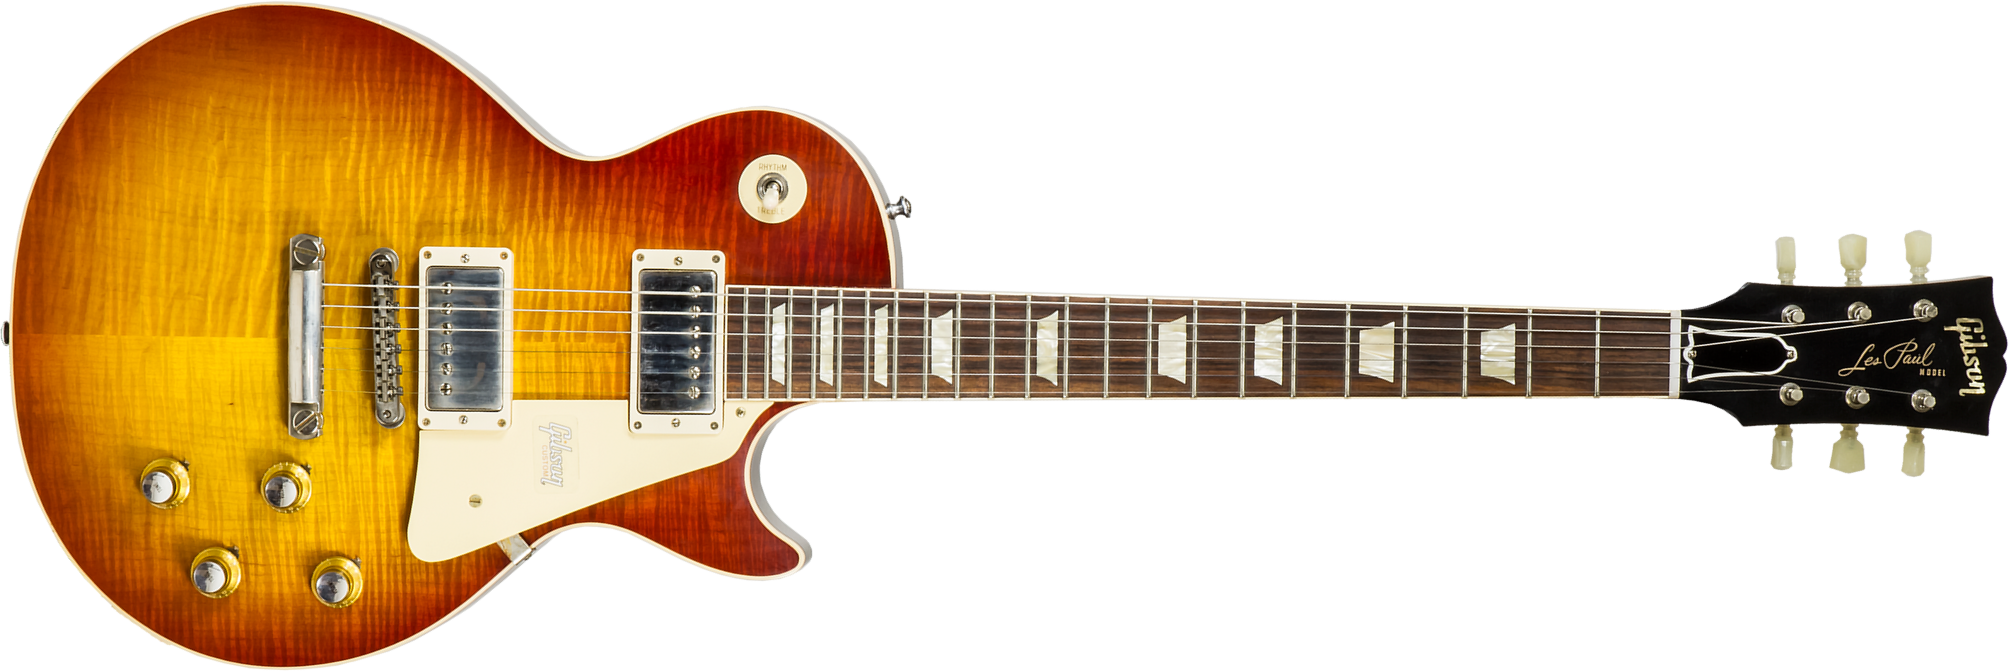 Gibson Custom Shop Les Paul Standard 1960 V2 60th Anniversary 2h Ht Rw #00492 - Vos Tomato Soup Burst - Single cut electric guitar - Main picture